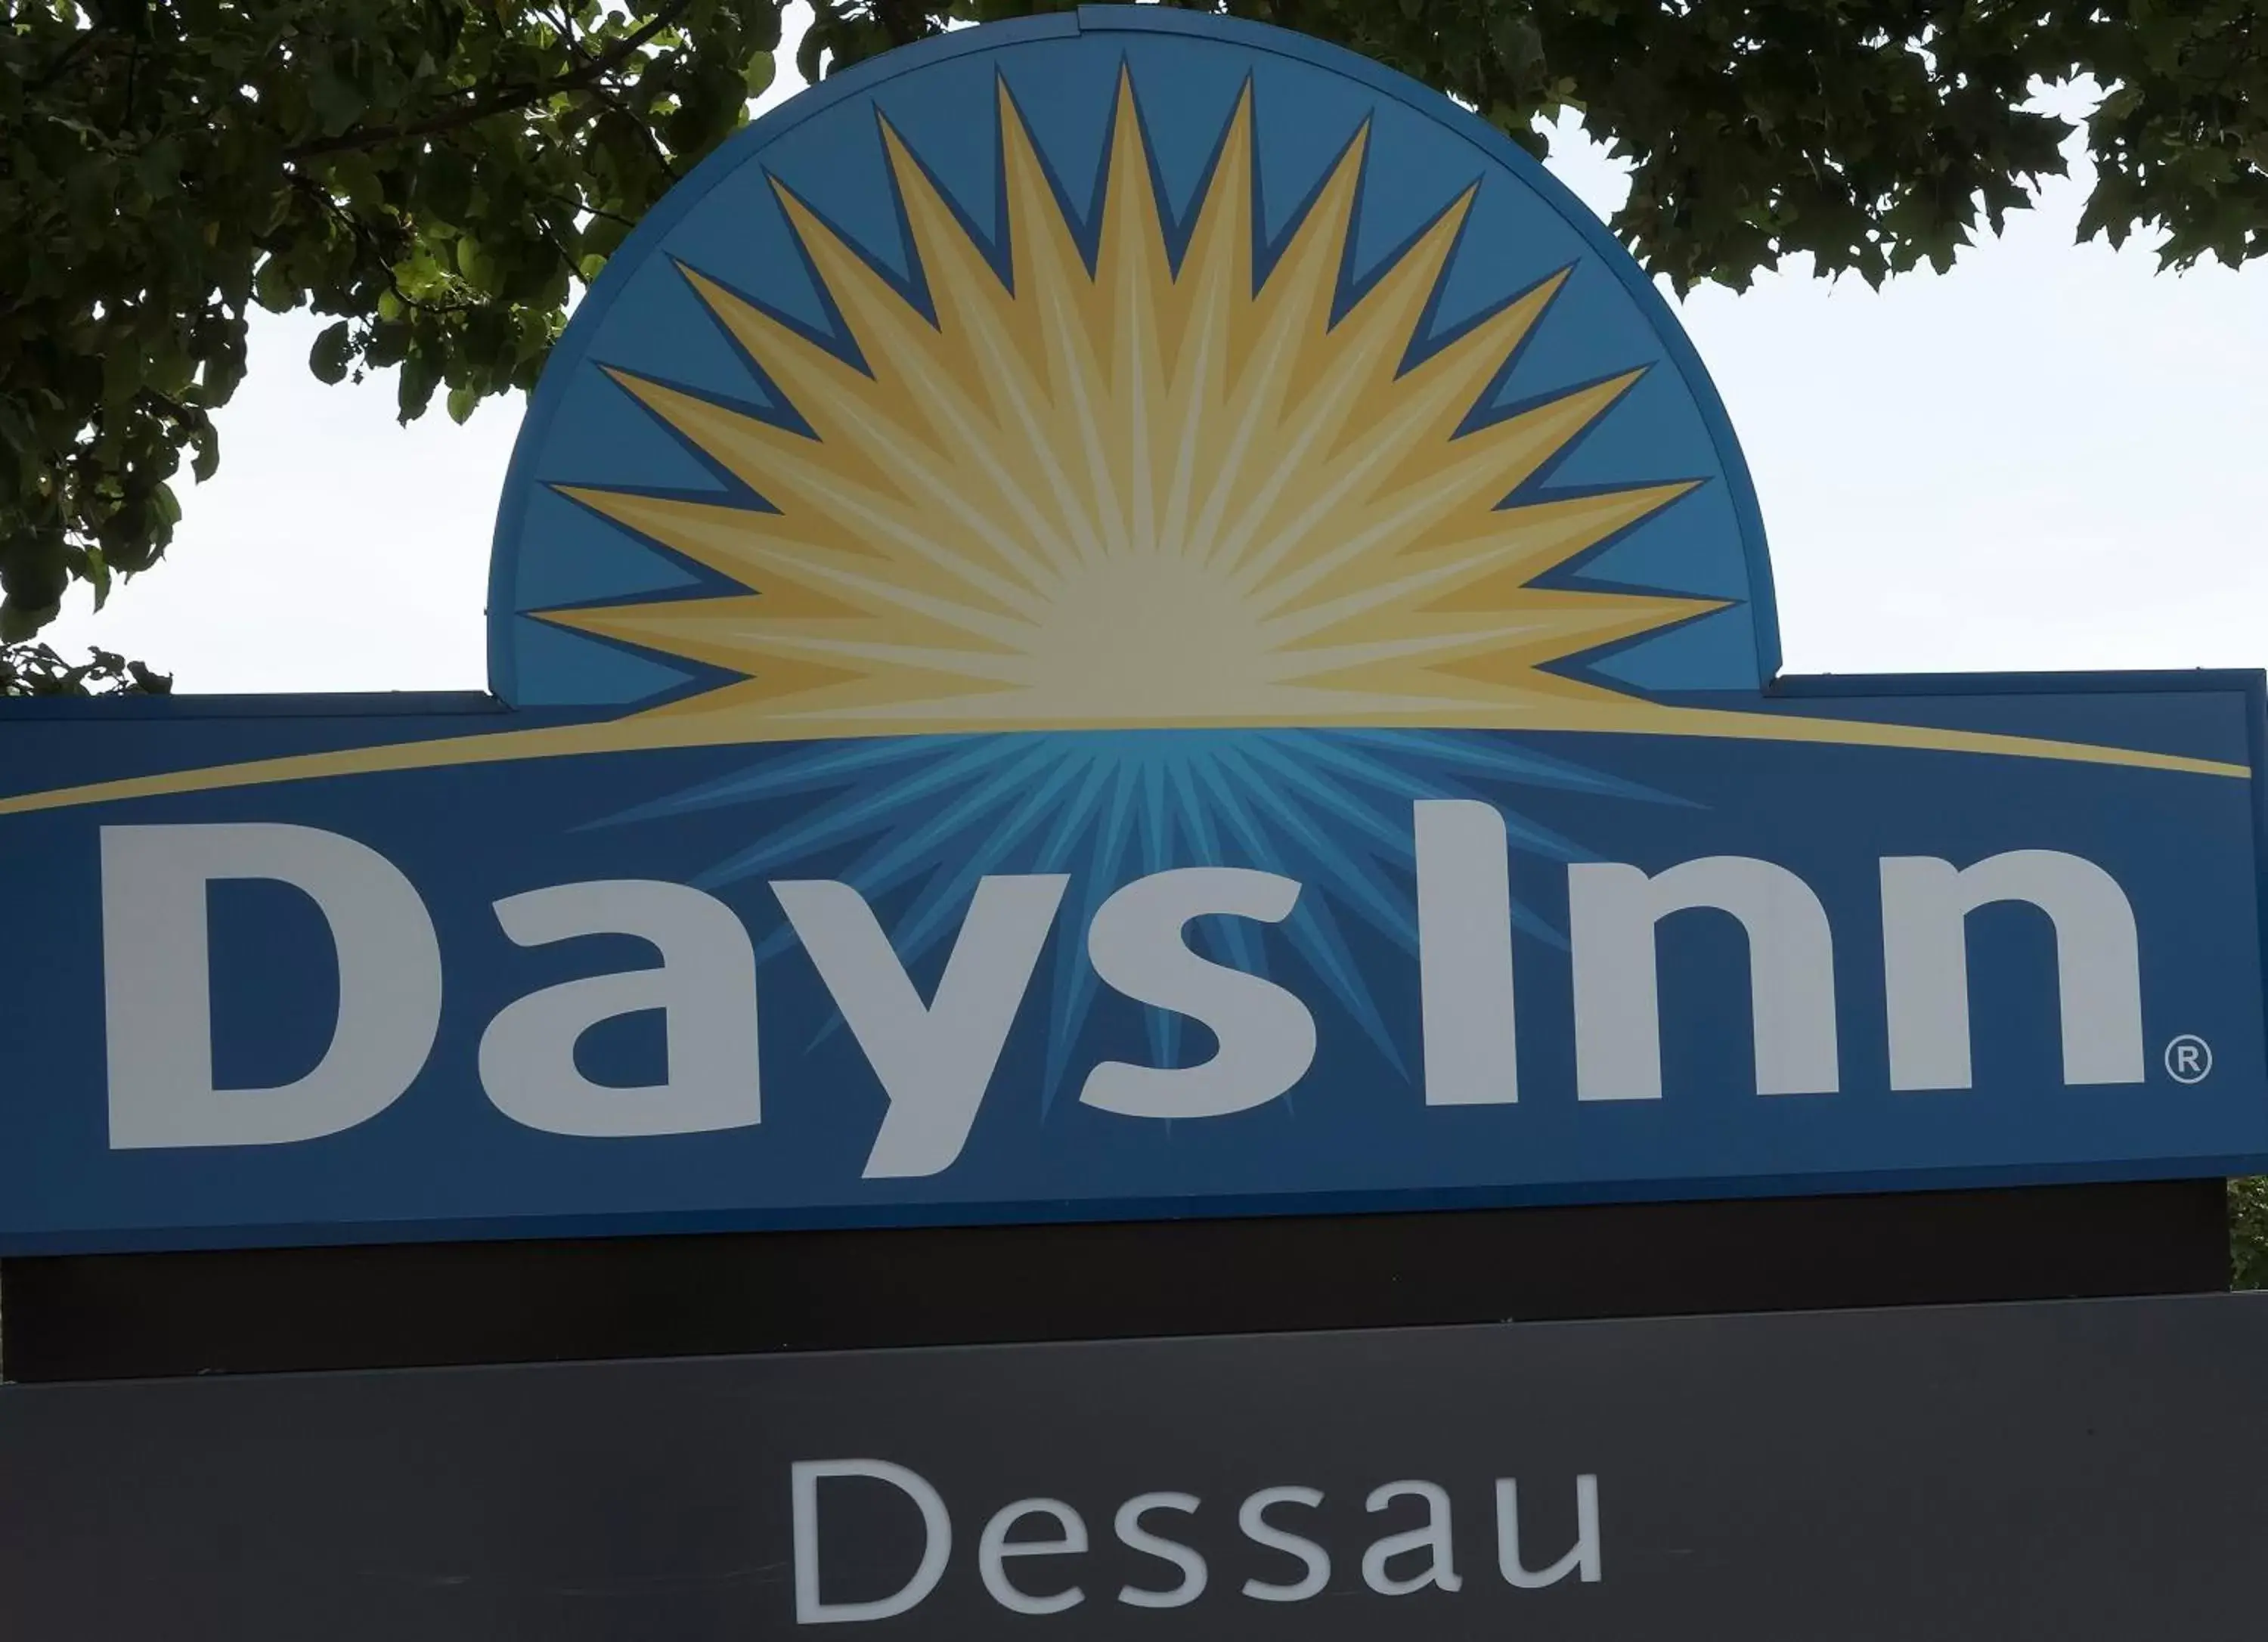 Property logo or sign in Days Inn Dessau